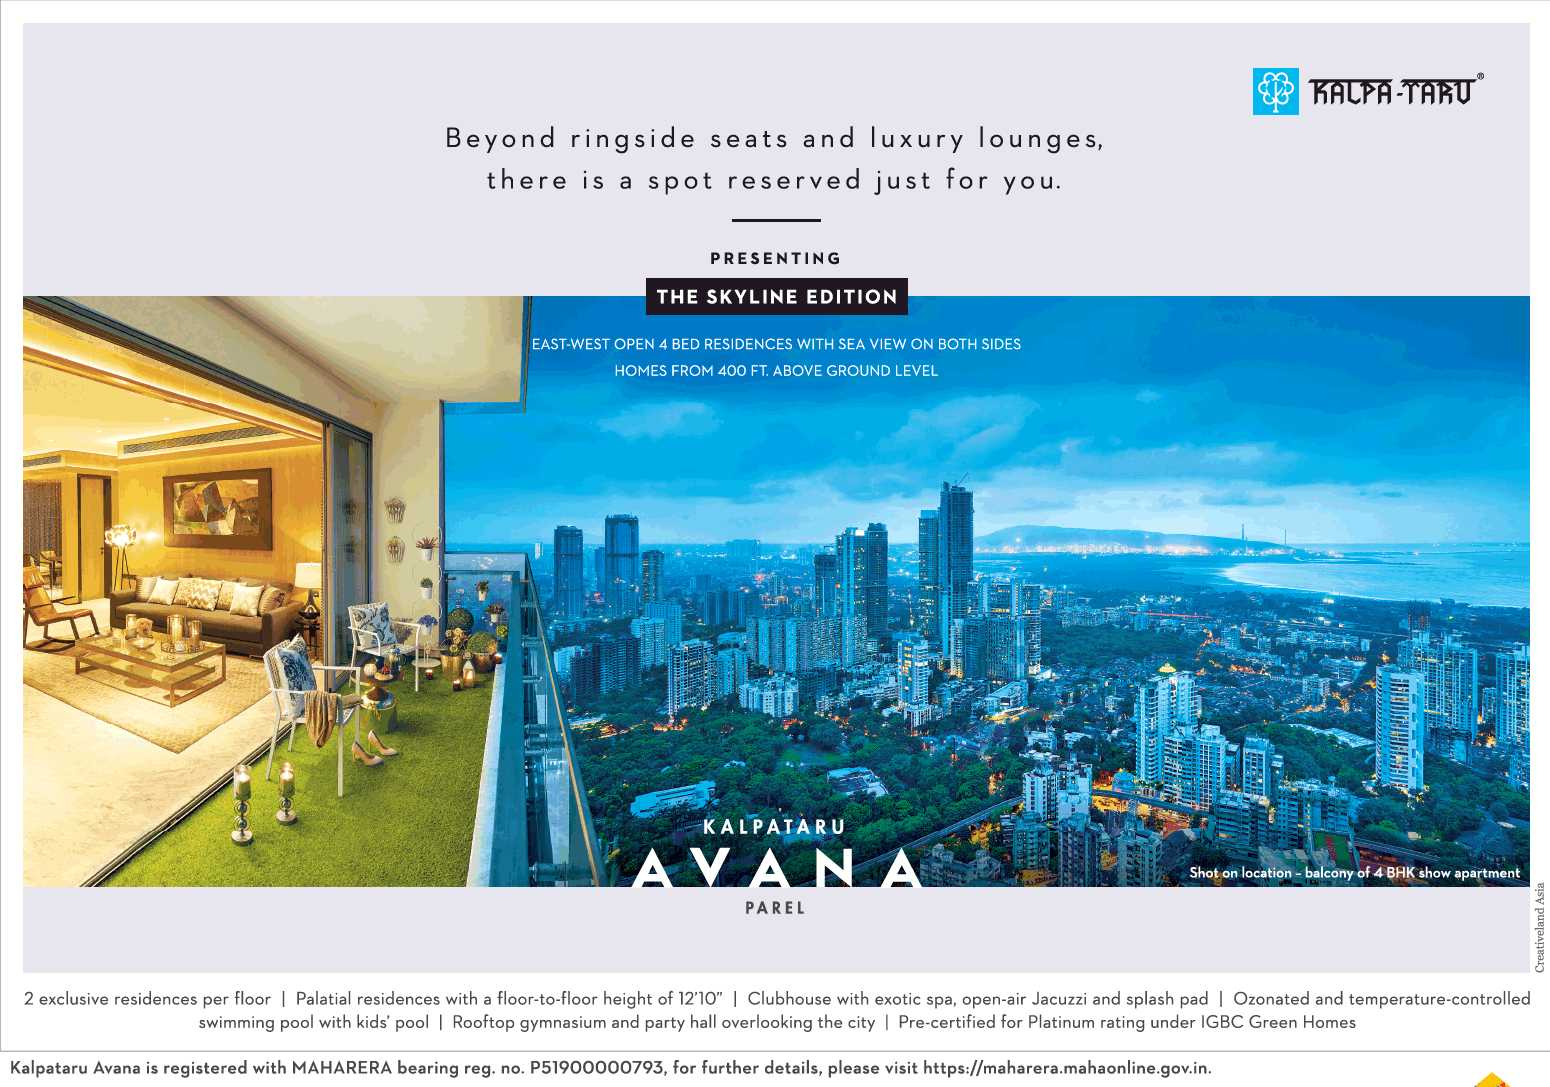 Presenting the skyline edition 4 bed residences at Kalpataru Avana in Parel. Mumbai Update